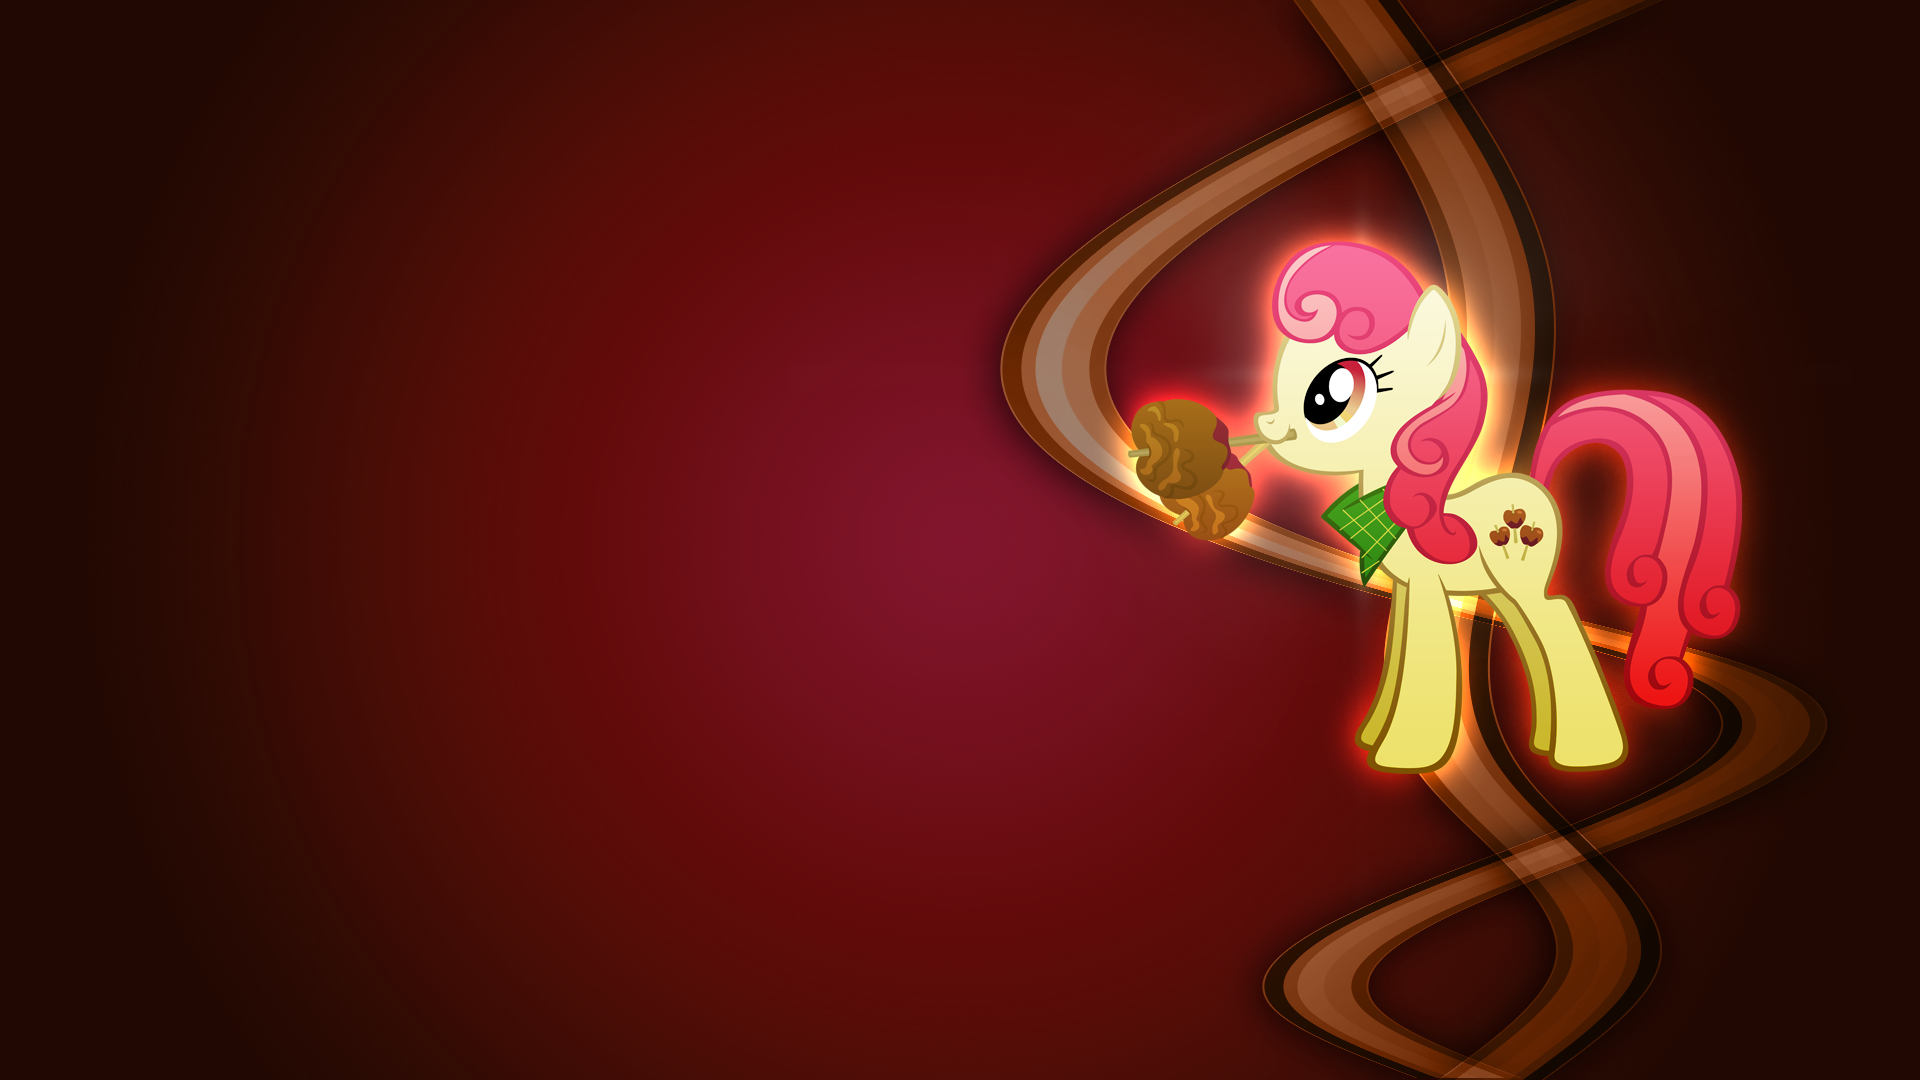 BG Ponies - Apple Bumpkin by Episkopi and solusjbj